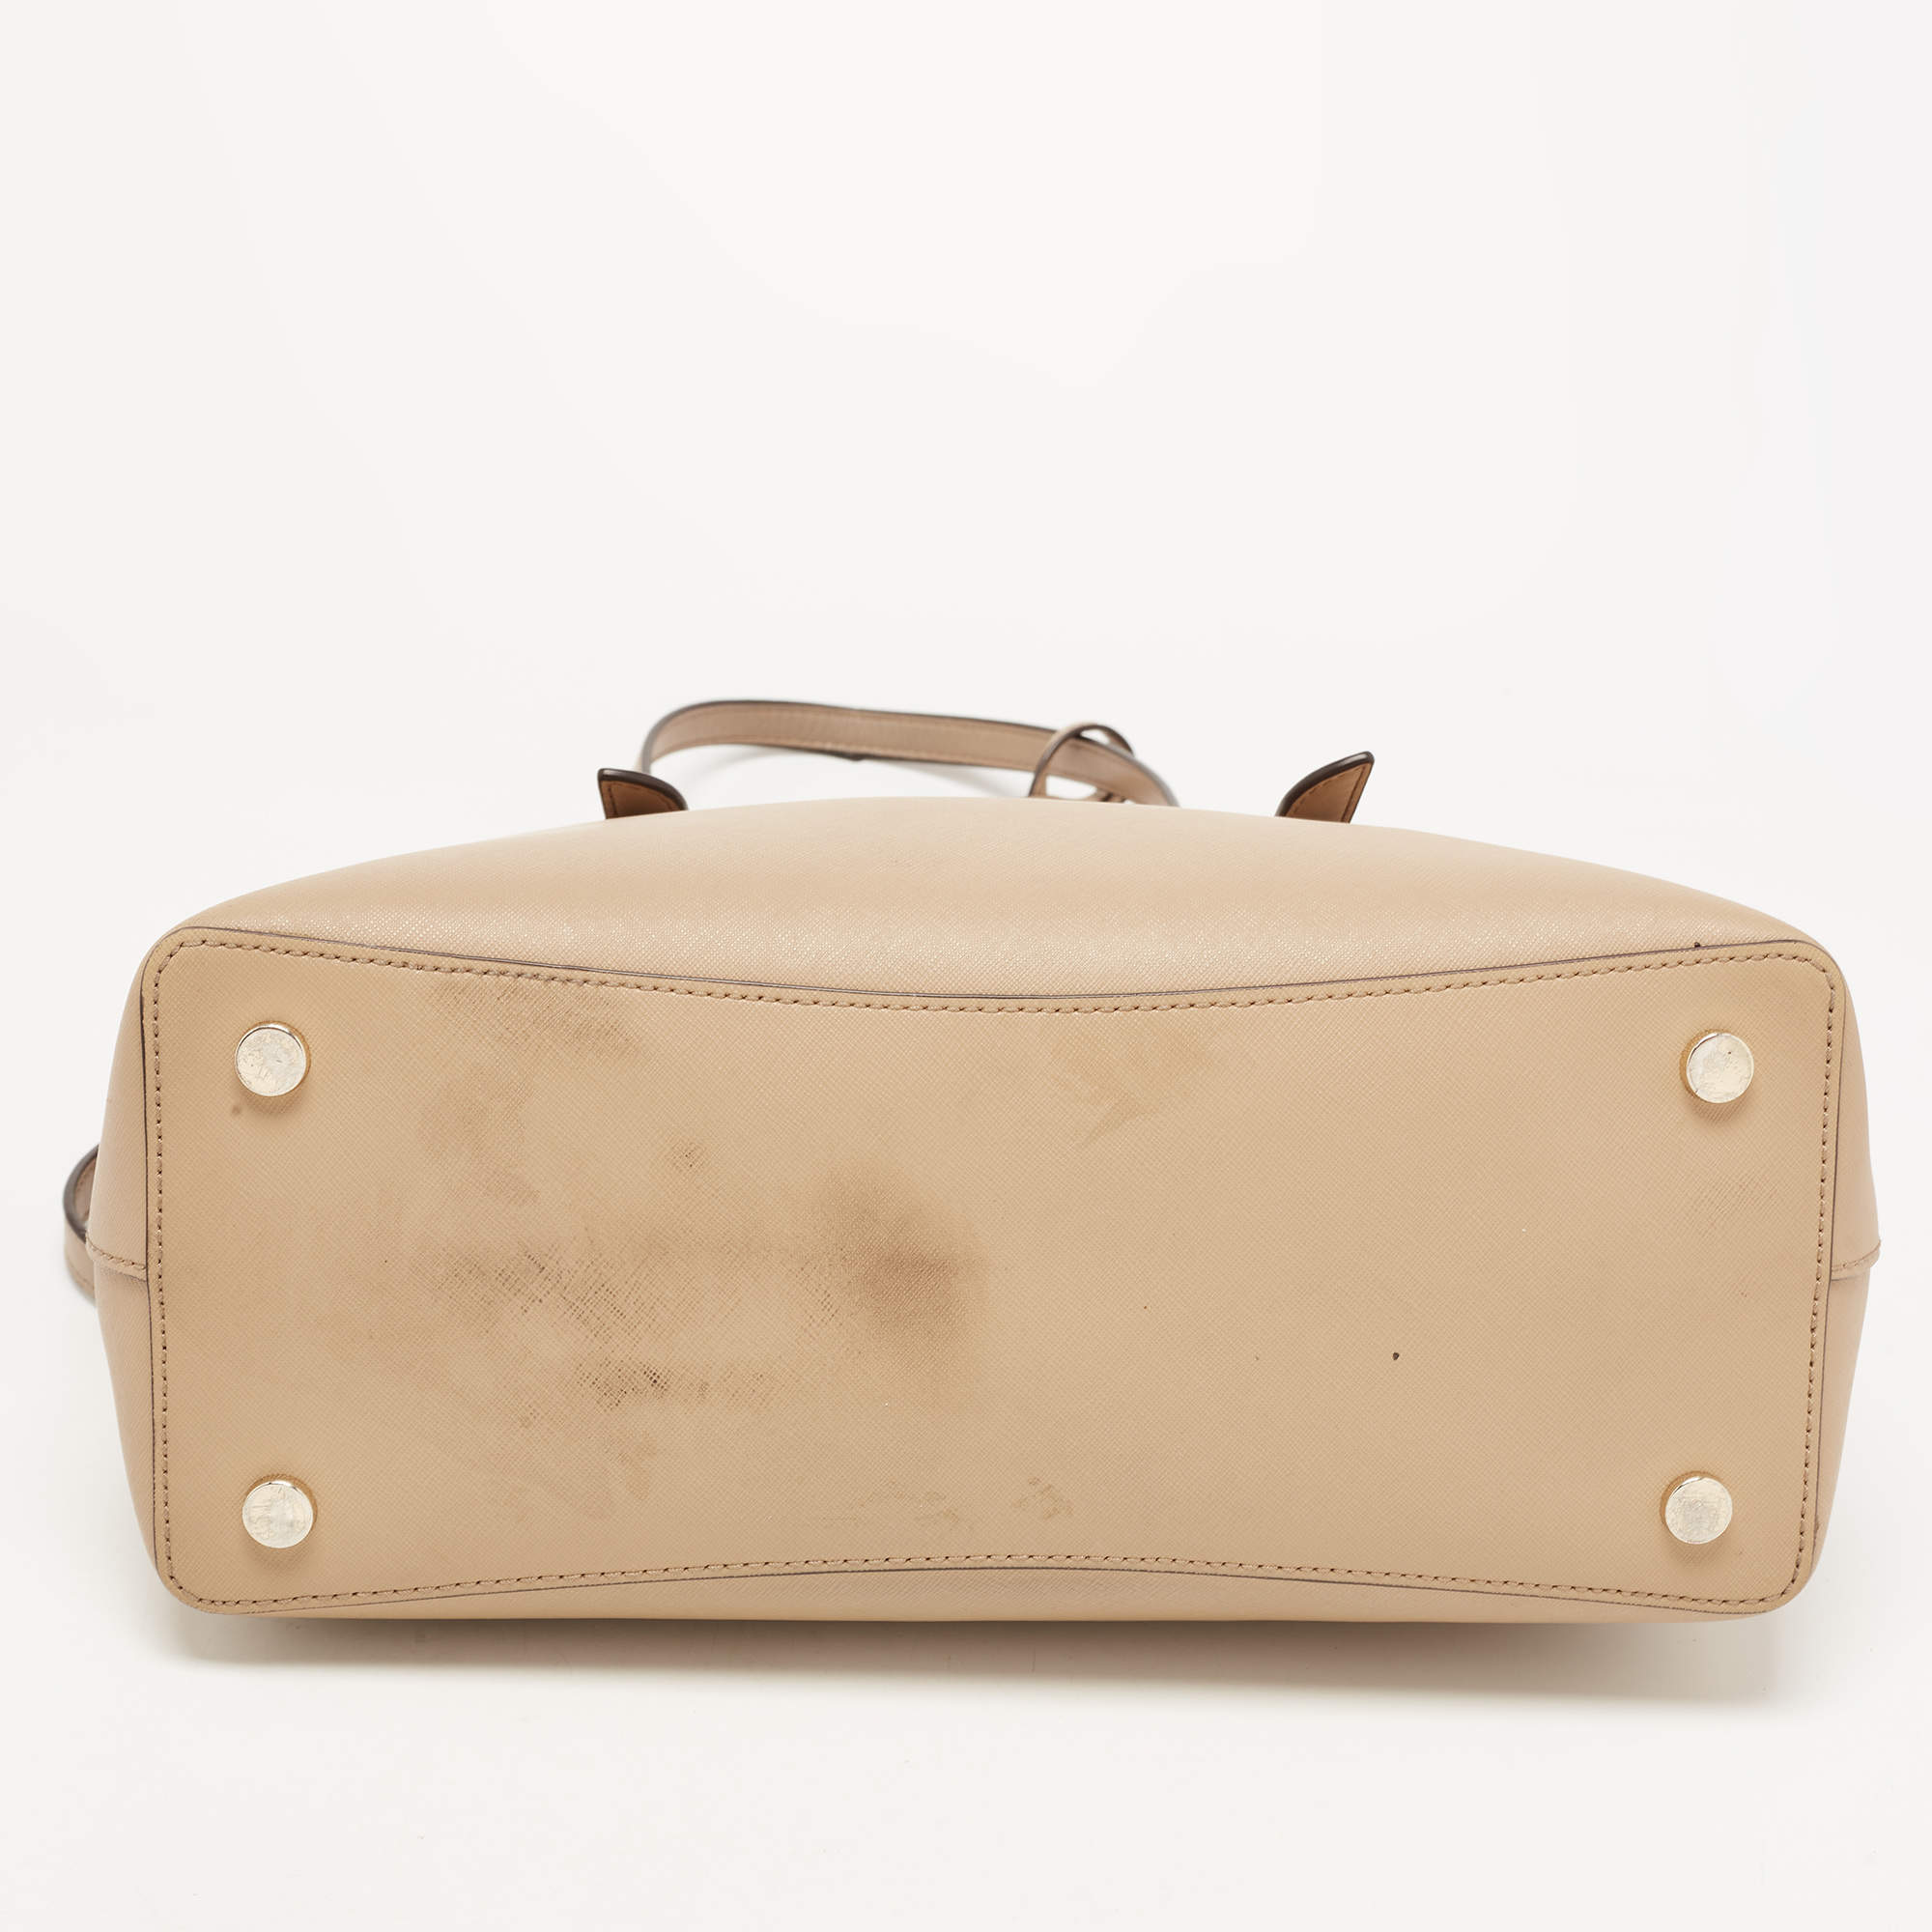 Michael Kors Mel Medium Saffiano Leather Tote Bag in Natural